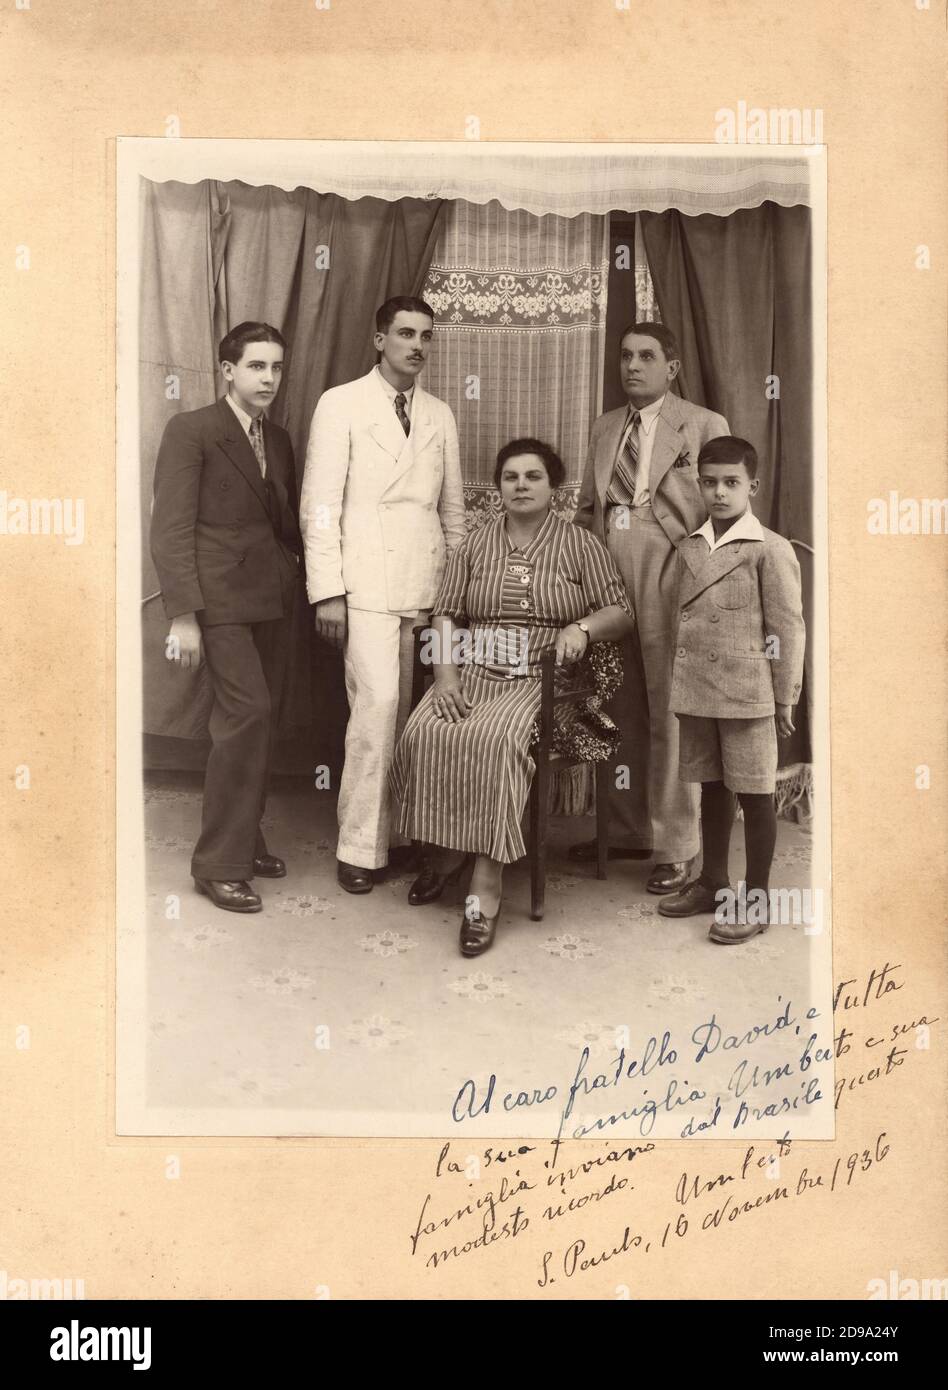 1936, San Paulo, BRÉSIL : une famille d'émigrants italiens , de religion JUIVE , Envoyer à des parents italiens un groupe de photos avec dévouement - BRASILE - EBREI - EBREO - EBRAICO - EBRAISMO - ÉMIGRANTS - EMIGRAZIONE - EMIGRANTE - EMIGLANTI ITALIANI - ITALIA - FOTO STORICHE - HISTOIRE - portrait - ritrato - IMMIGRANTS - Immigranti - FAMILLE - FAMBIGLIA - FAMBIGAMBINI - FAMBIGLIA bambino - INFANTILES - ENFANTS - MODE - MODA - ANNI TRENTA - 30 - '30 - cravate - Cravatta - colletto - col - anello - anelli - anneaux - figli - fils - frères - fratelli - fratello - matriarca - matriarcato - Banque D'Images